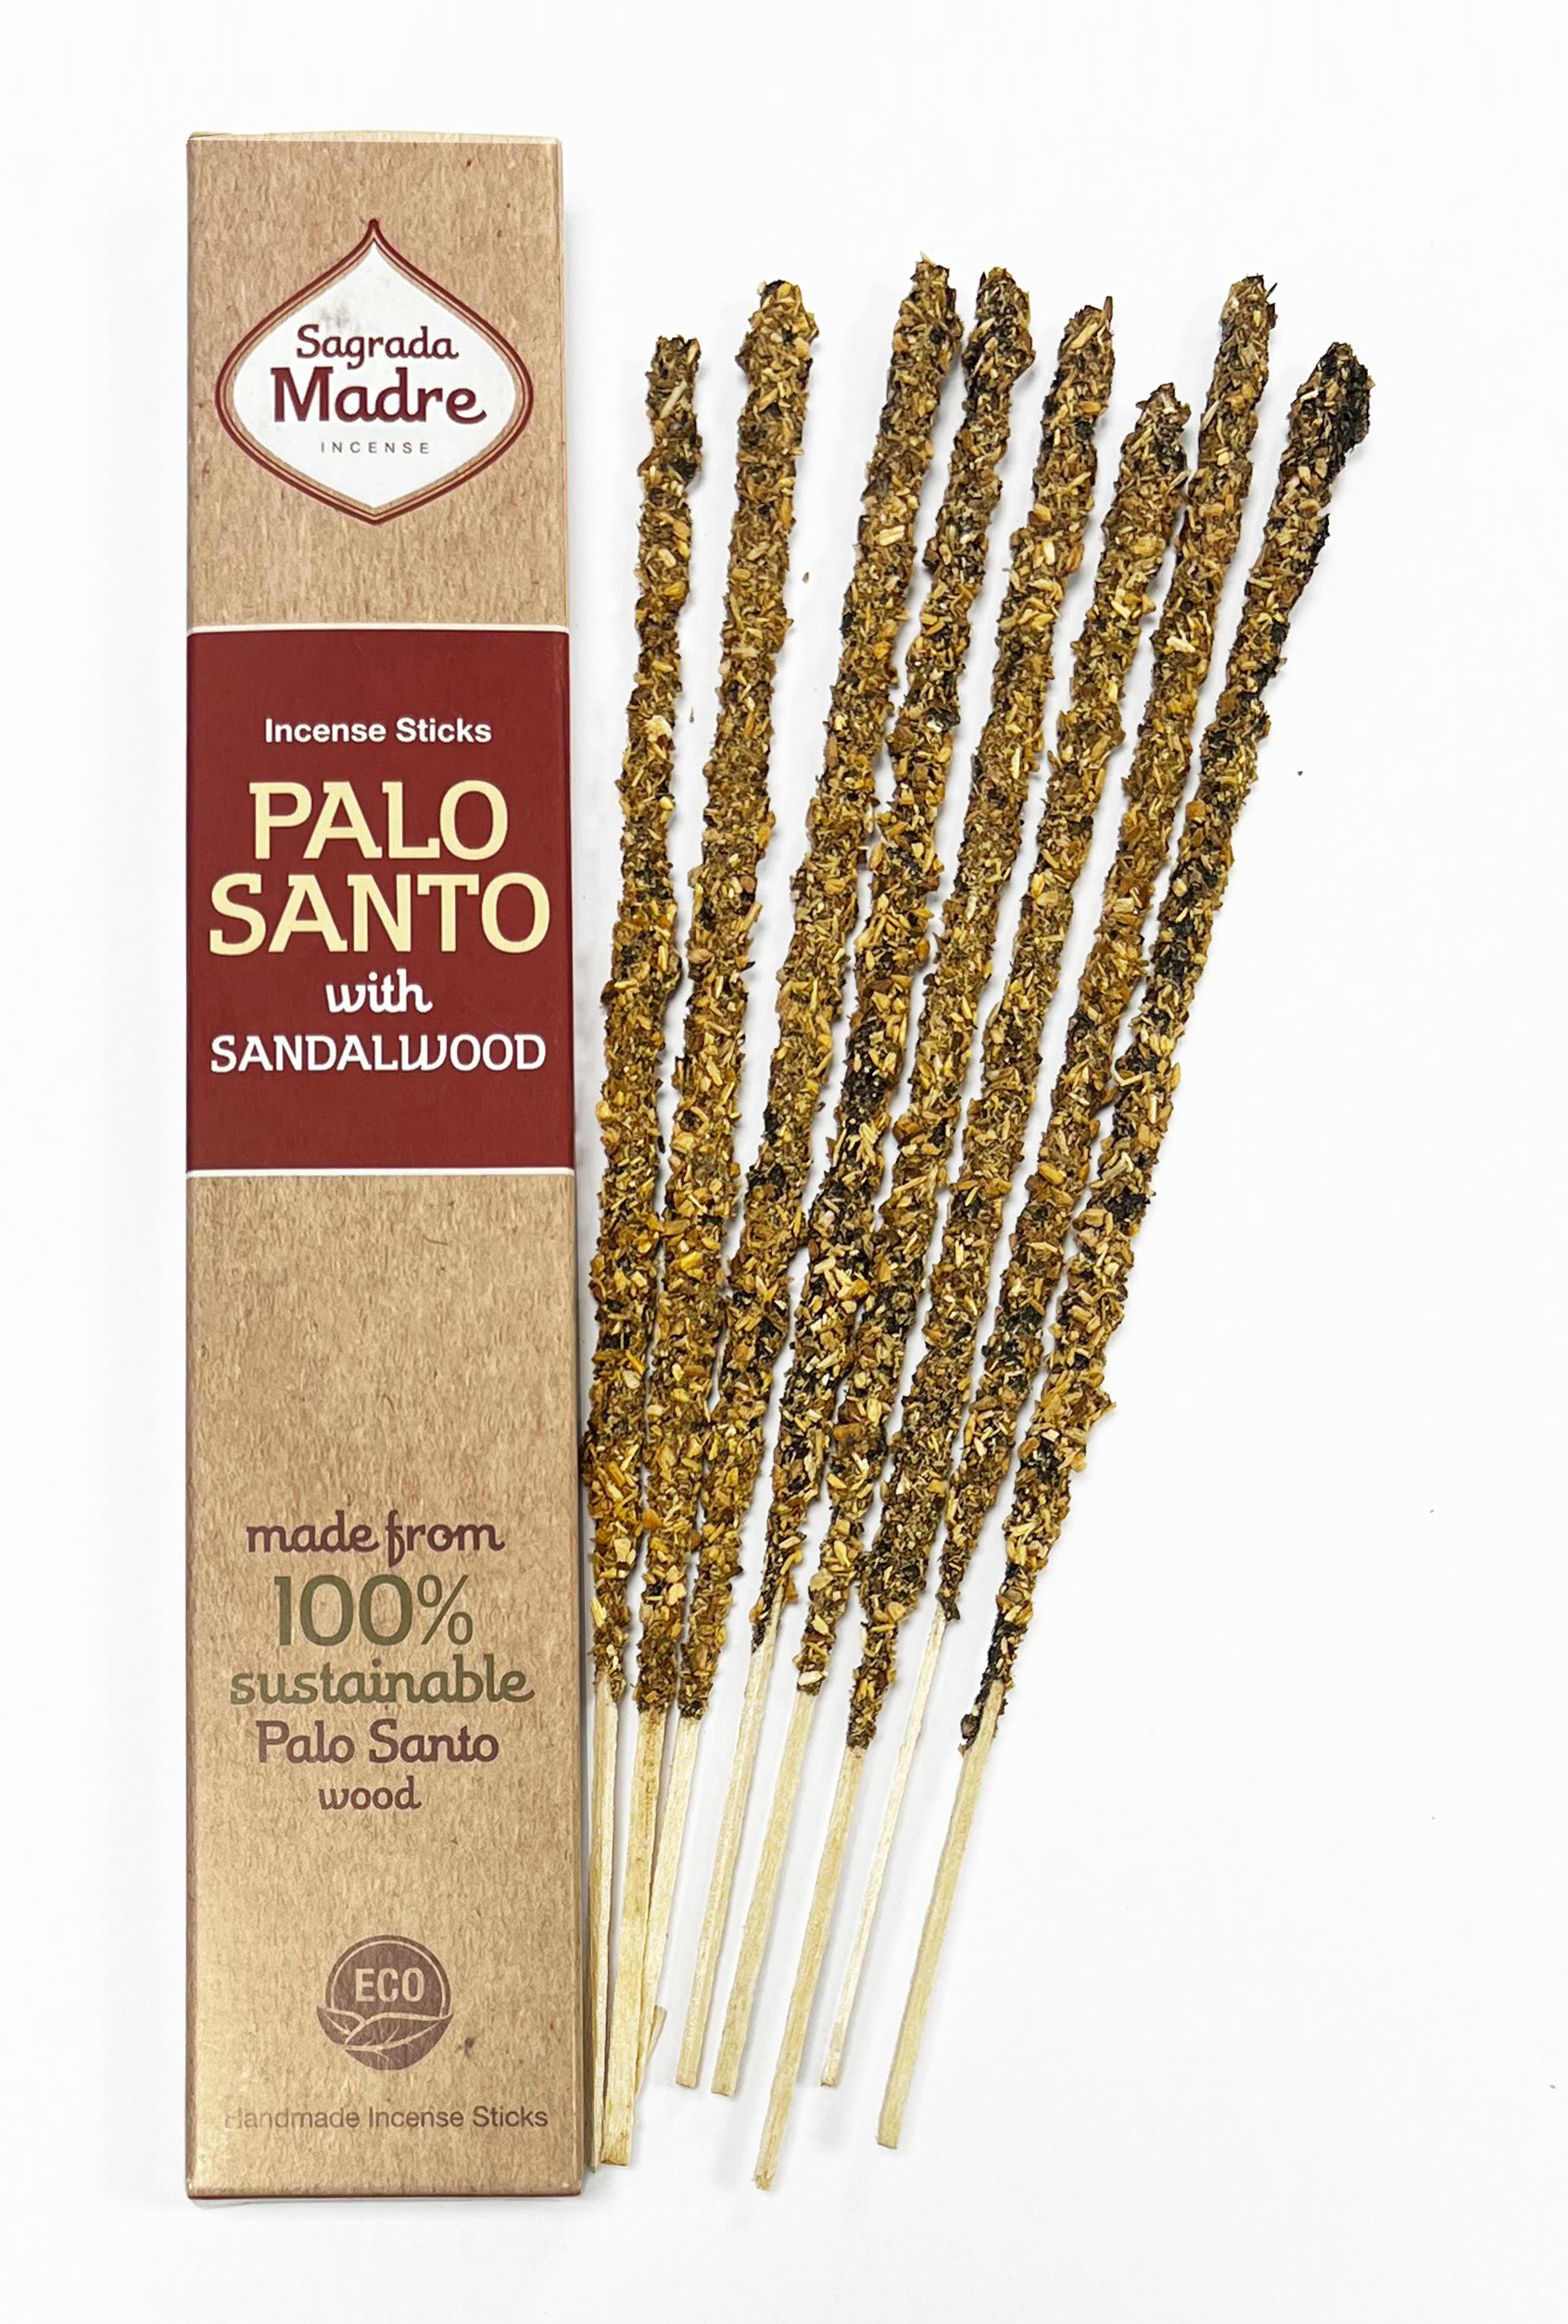 Sagrada Madre - Incense Palo Santo and Sandalwood